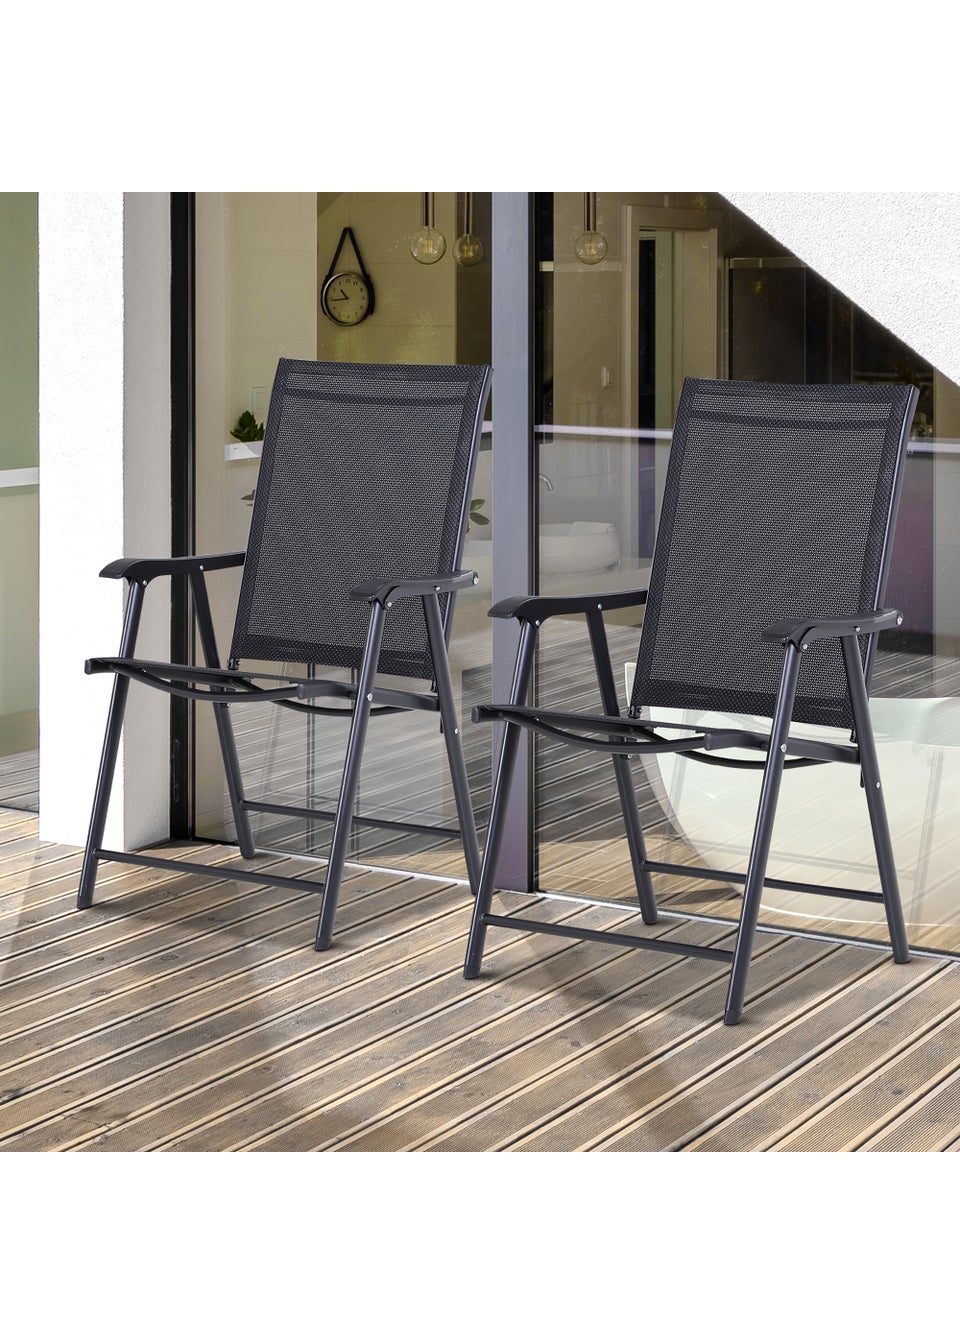 Outsunny 2 Piece Foldable Metal Chairs (58cm x 64cm x 94cm)